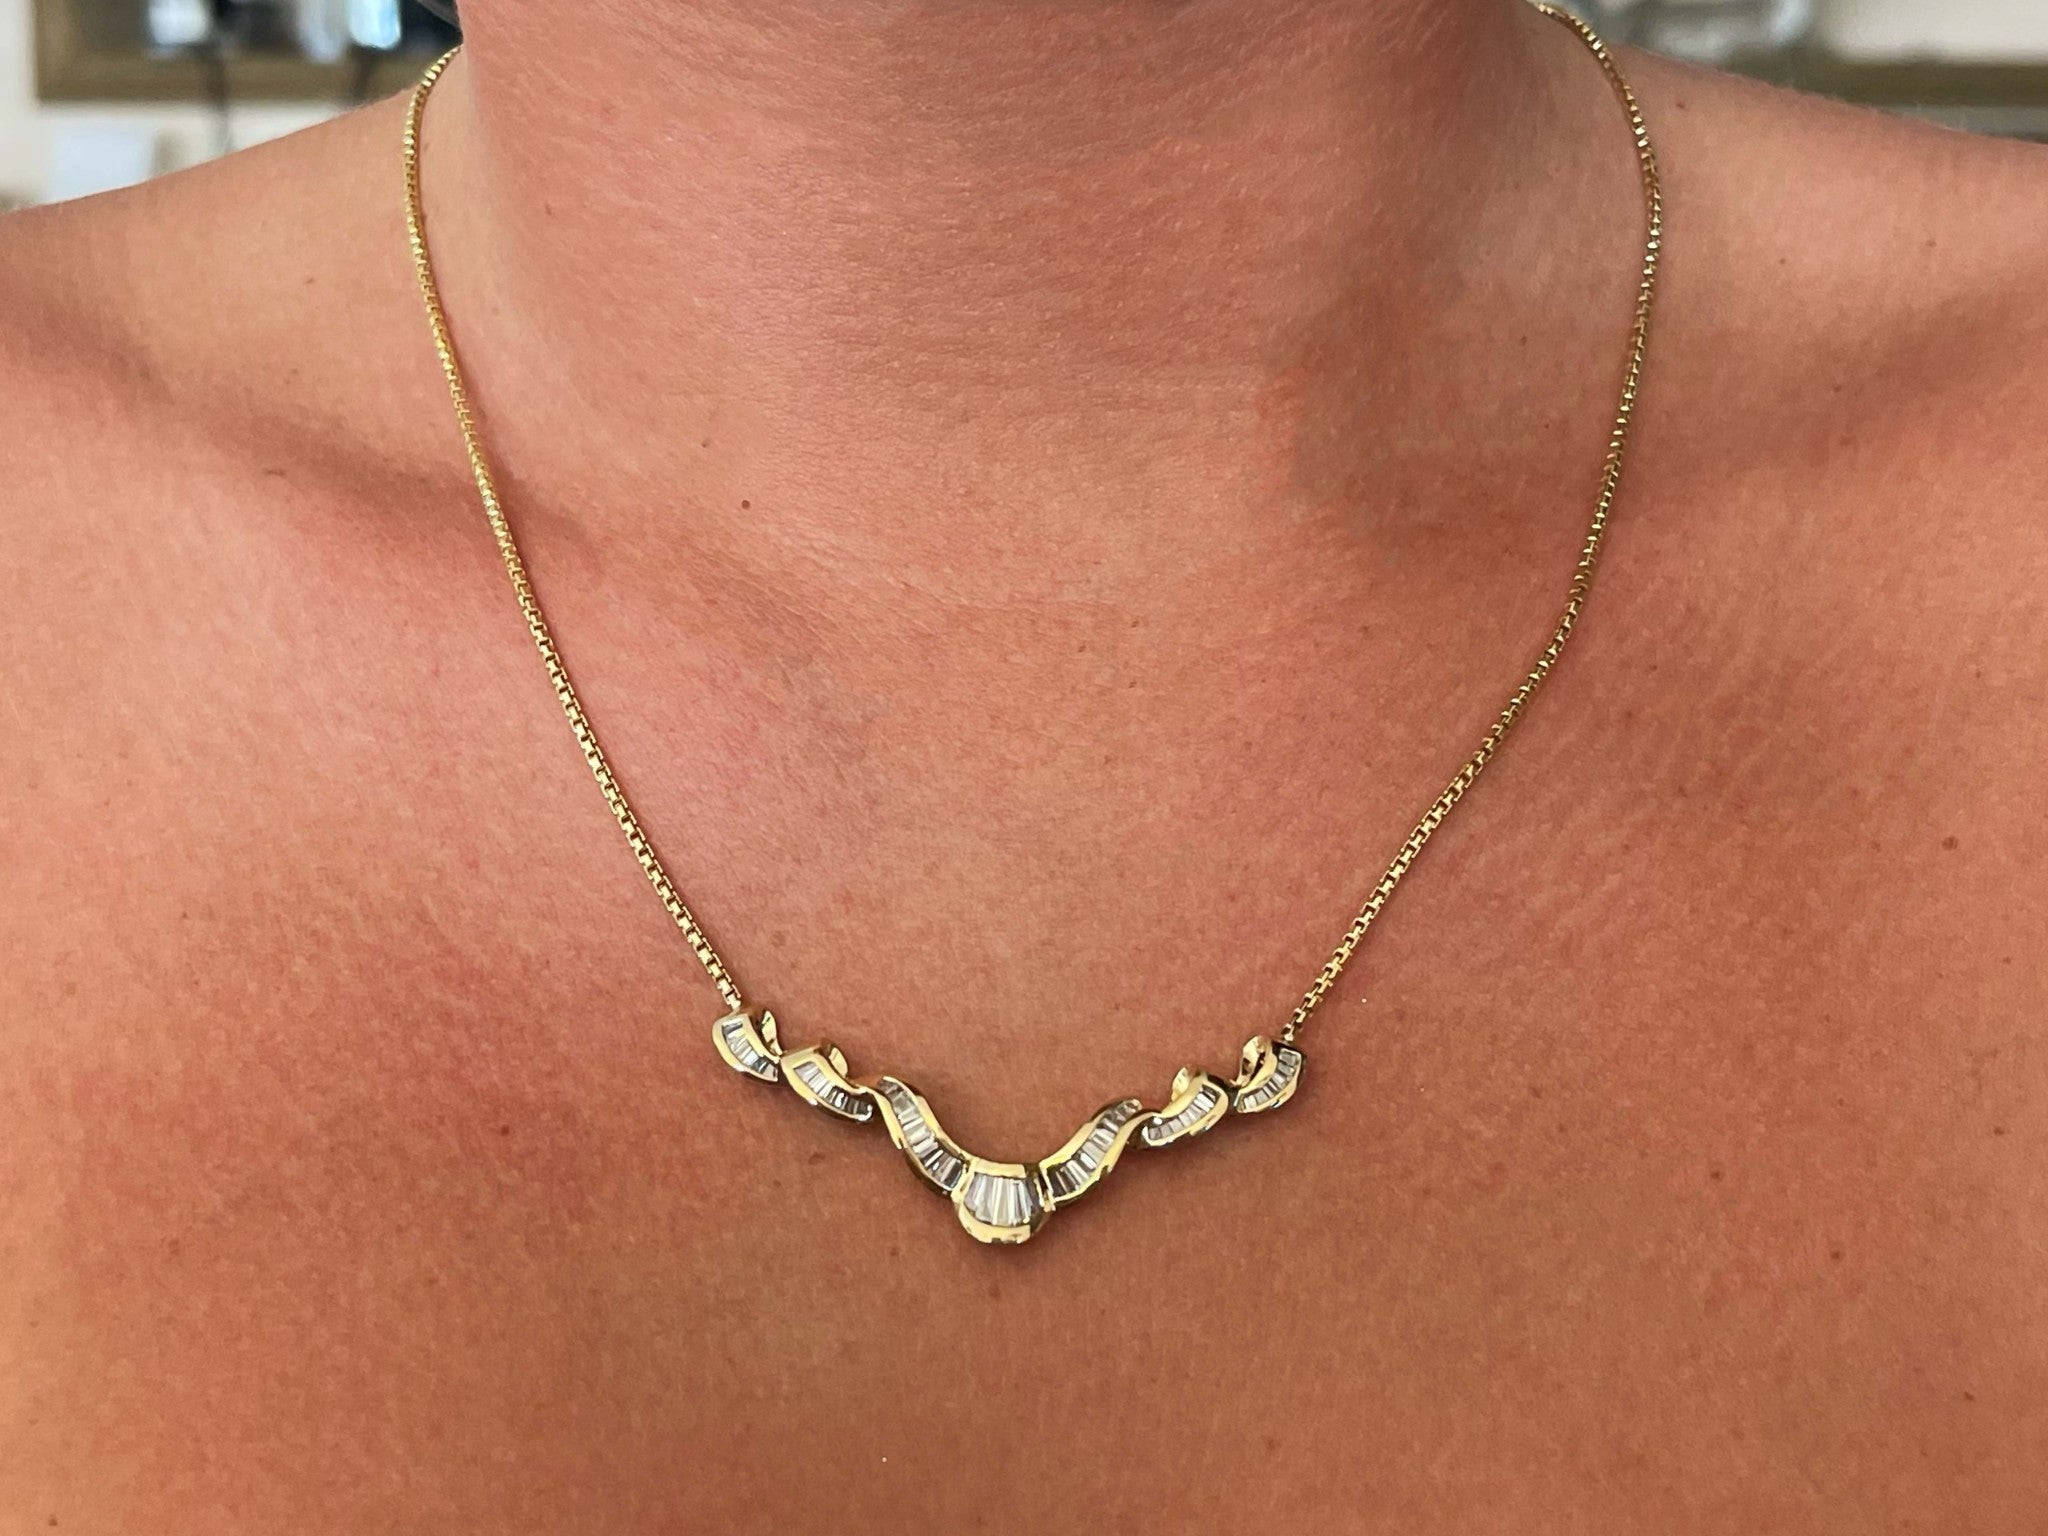 Solid 18k Yellow Gold Baguette Diamond Swirl Pendant Necklace